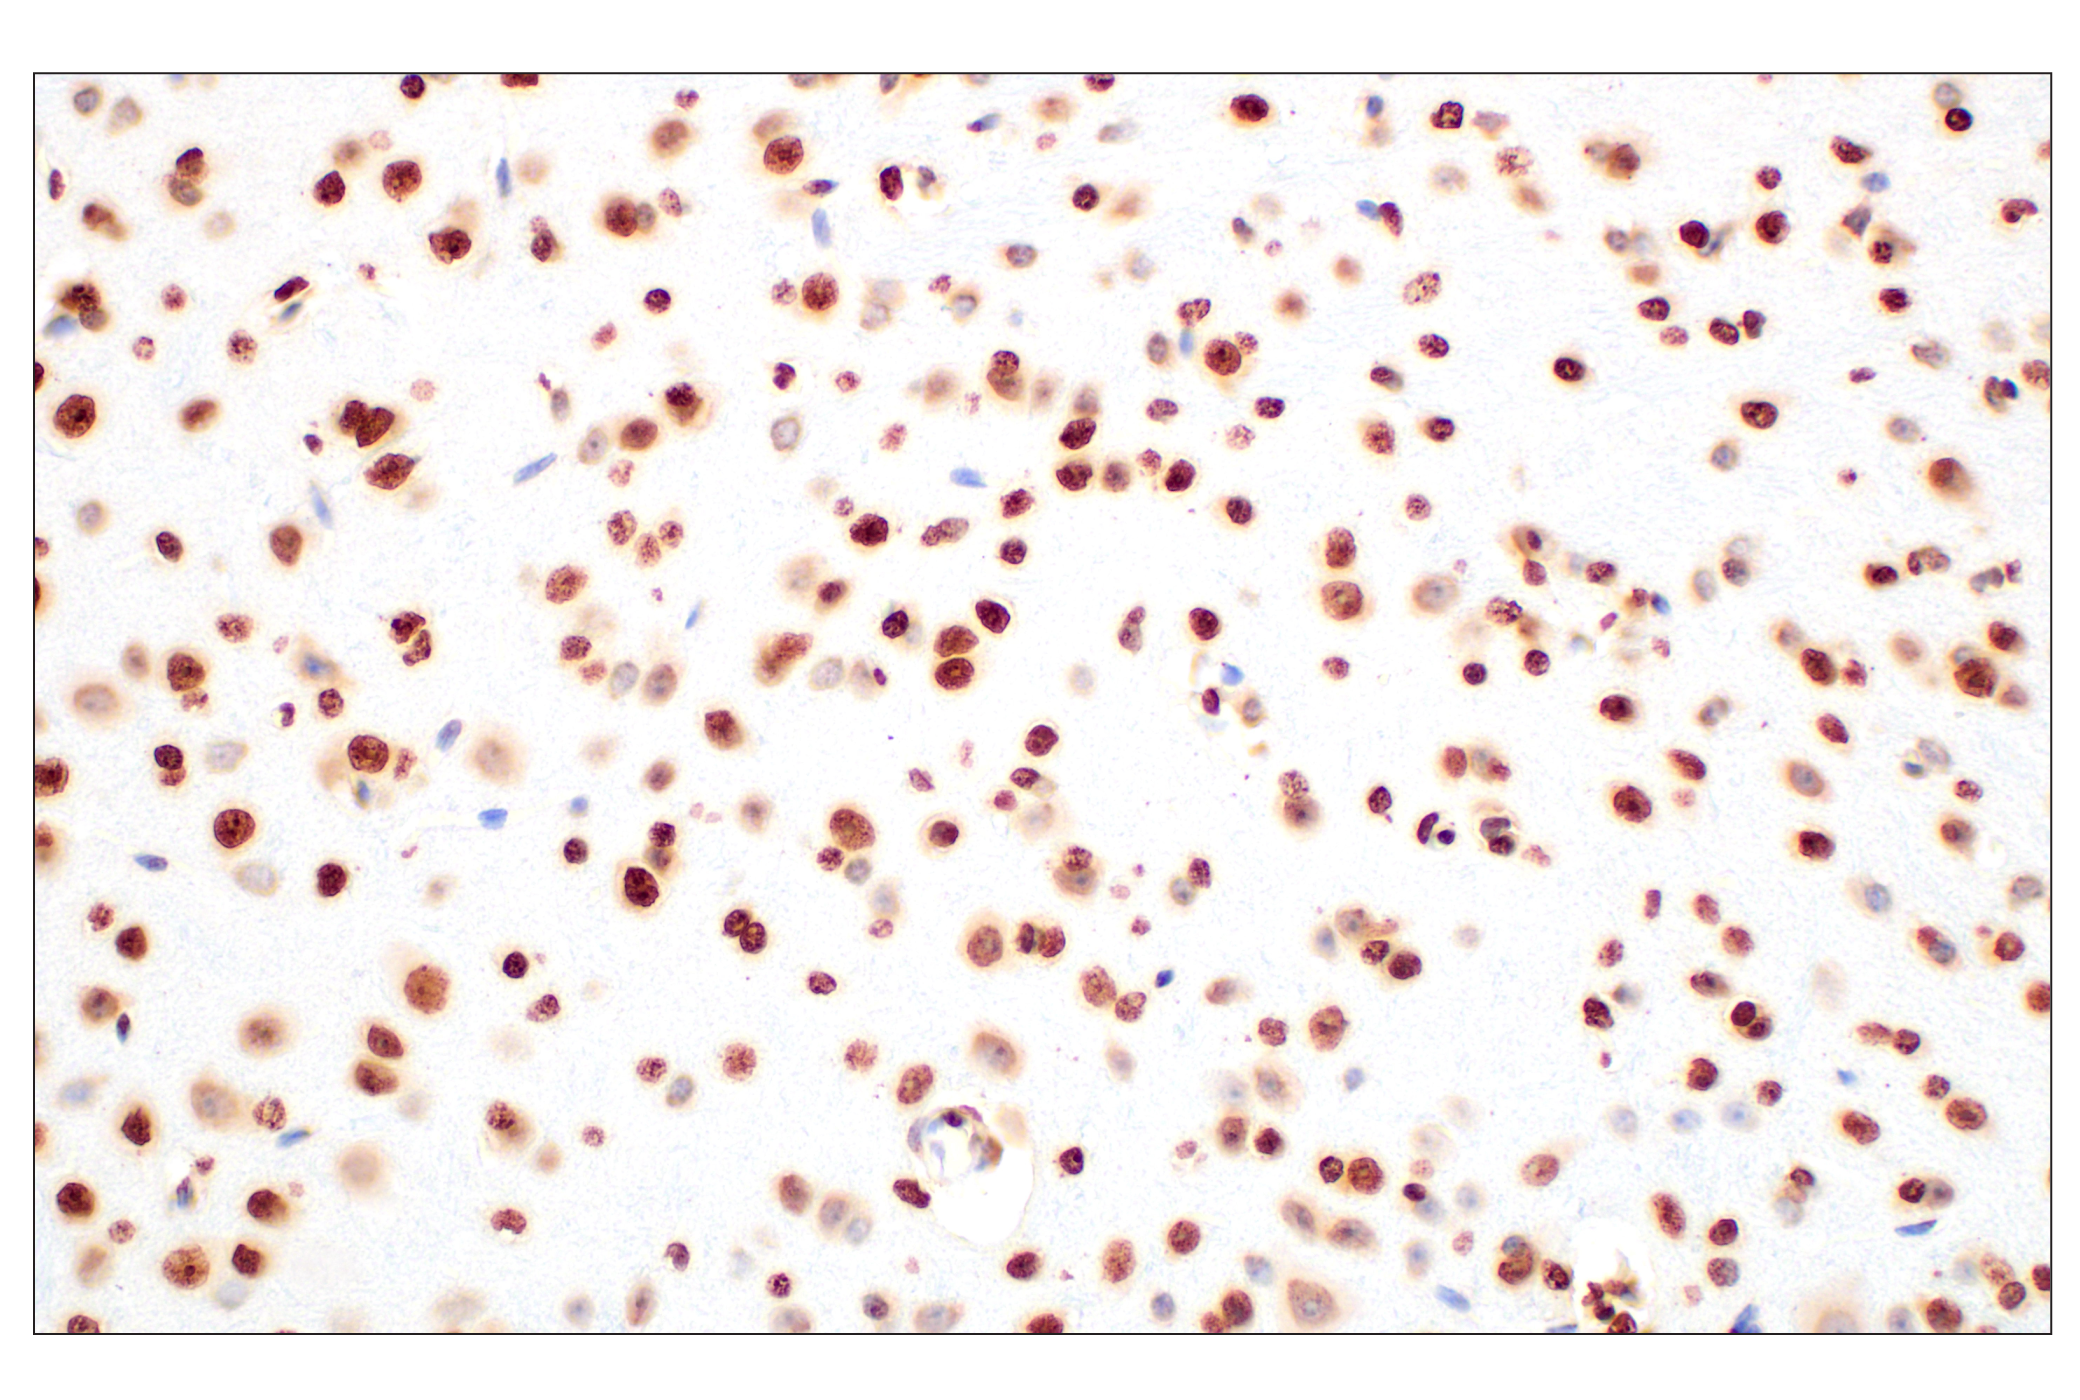  Image 20: Phospho-Histone H3 (Mitotic Marker) Antibody Sampler Kit